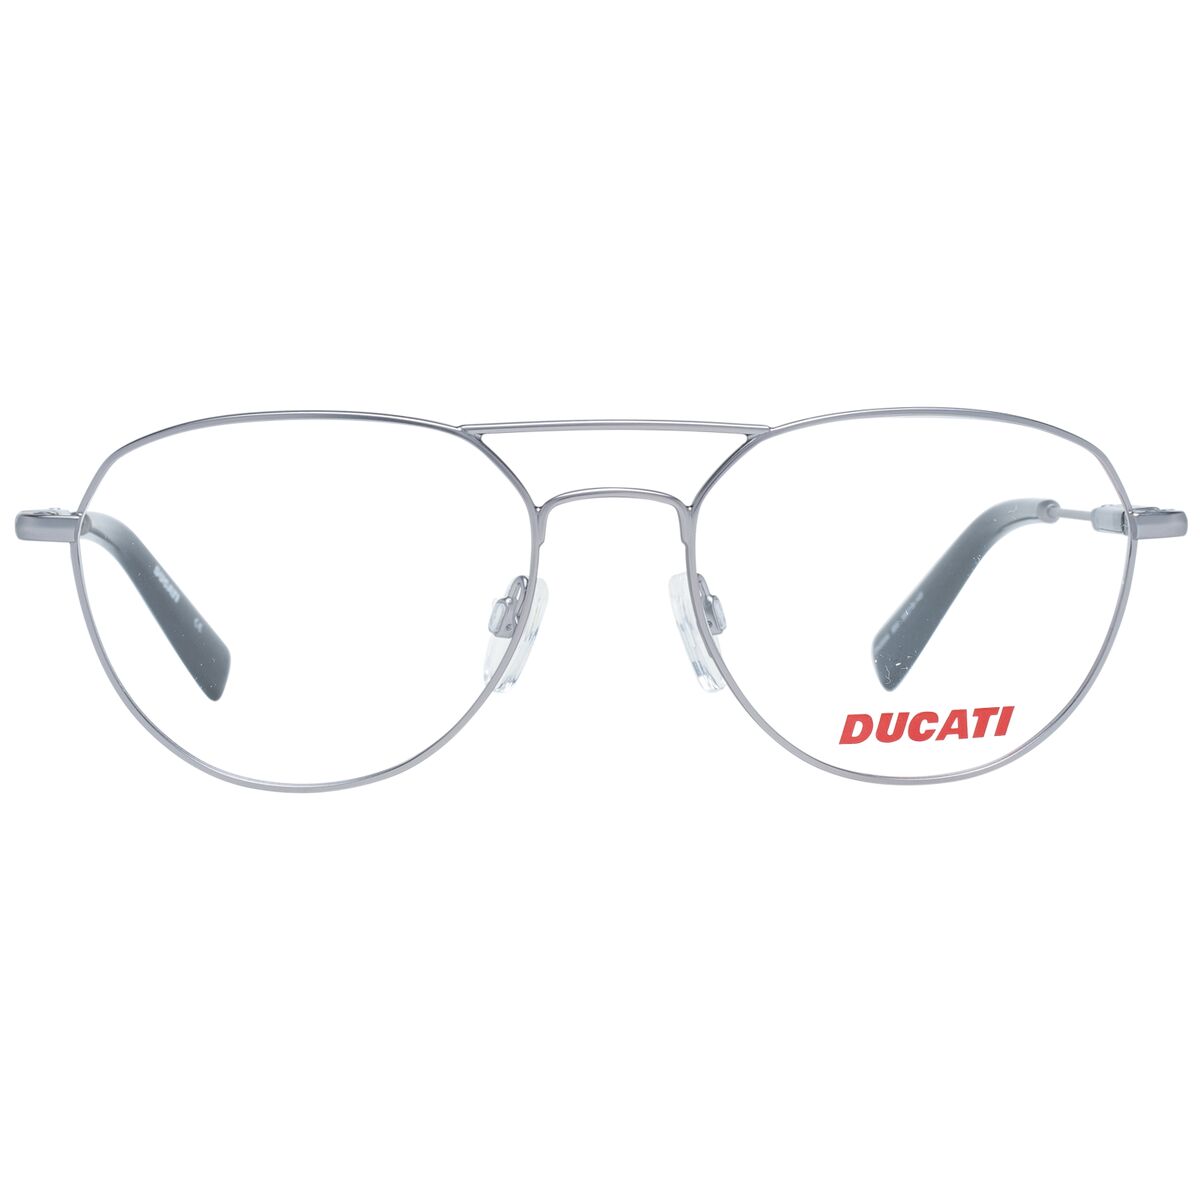 Kaufe Brillenfassung Ducati DA3004 55900 bei AWK Flagship um € 67.00